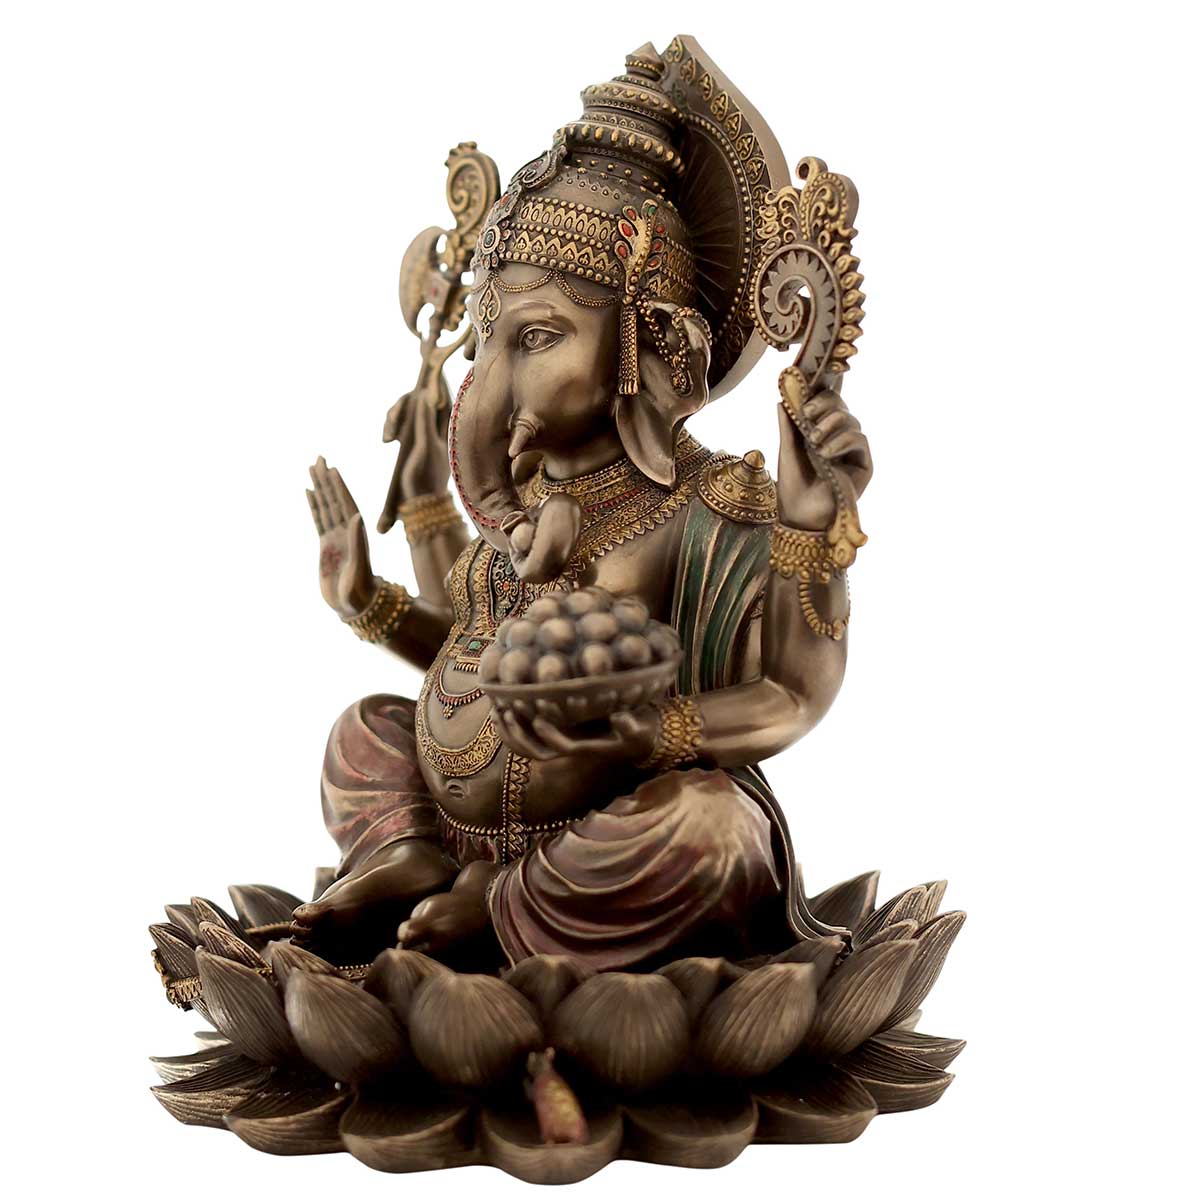 Lord Ganesha Idol made of Bronze Composite - 9 x 10 x 12 Inch, 2.9 Kg